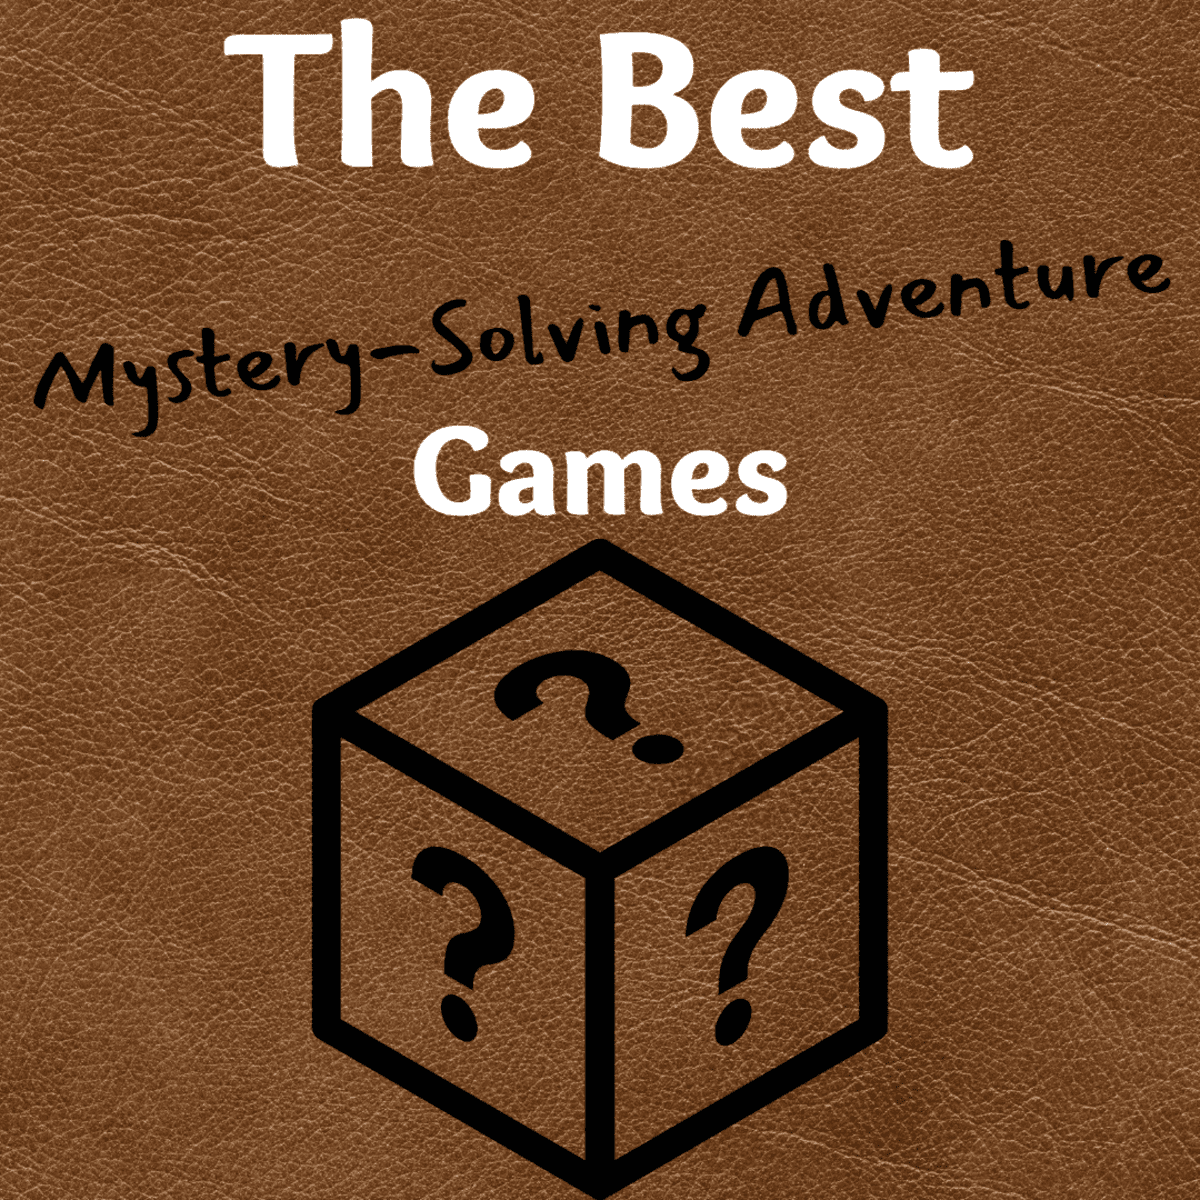 optillen Nietje welvaart Top Mystery-Solving Adventure Games for PlayStation 3 and Xbox 360 -  LevelSkip